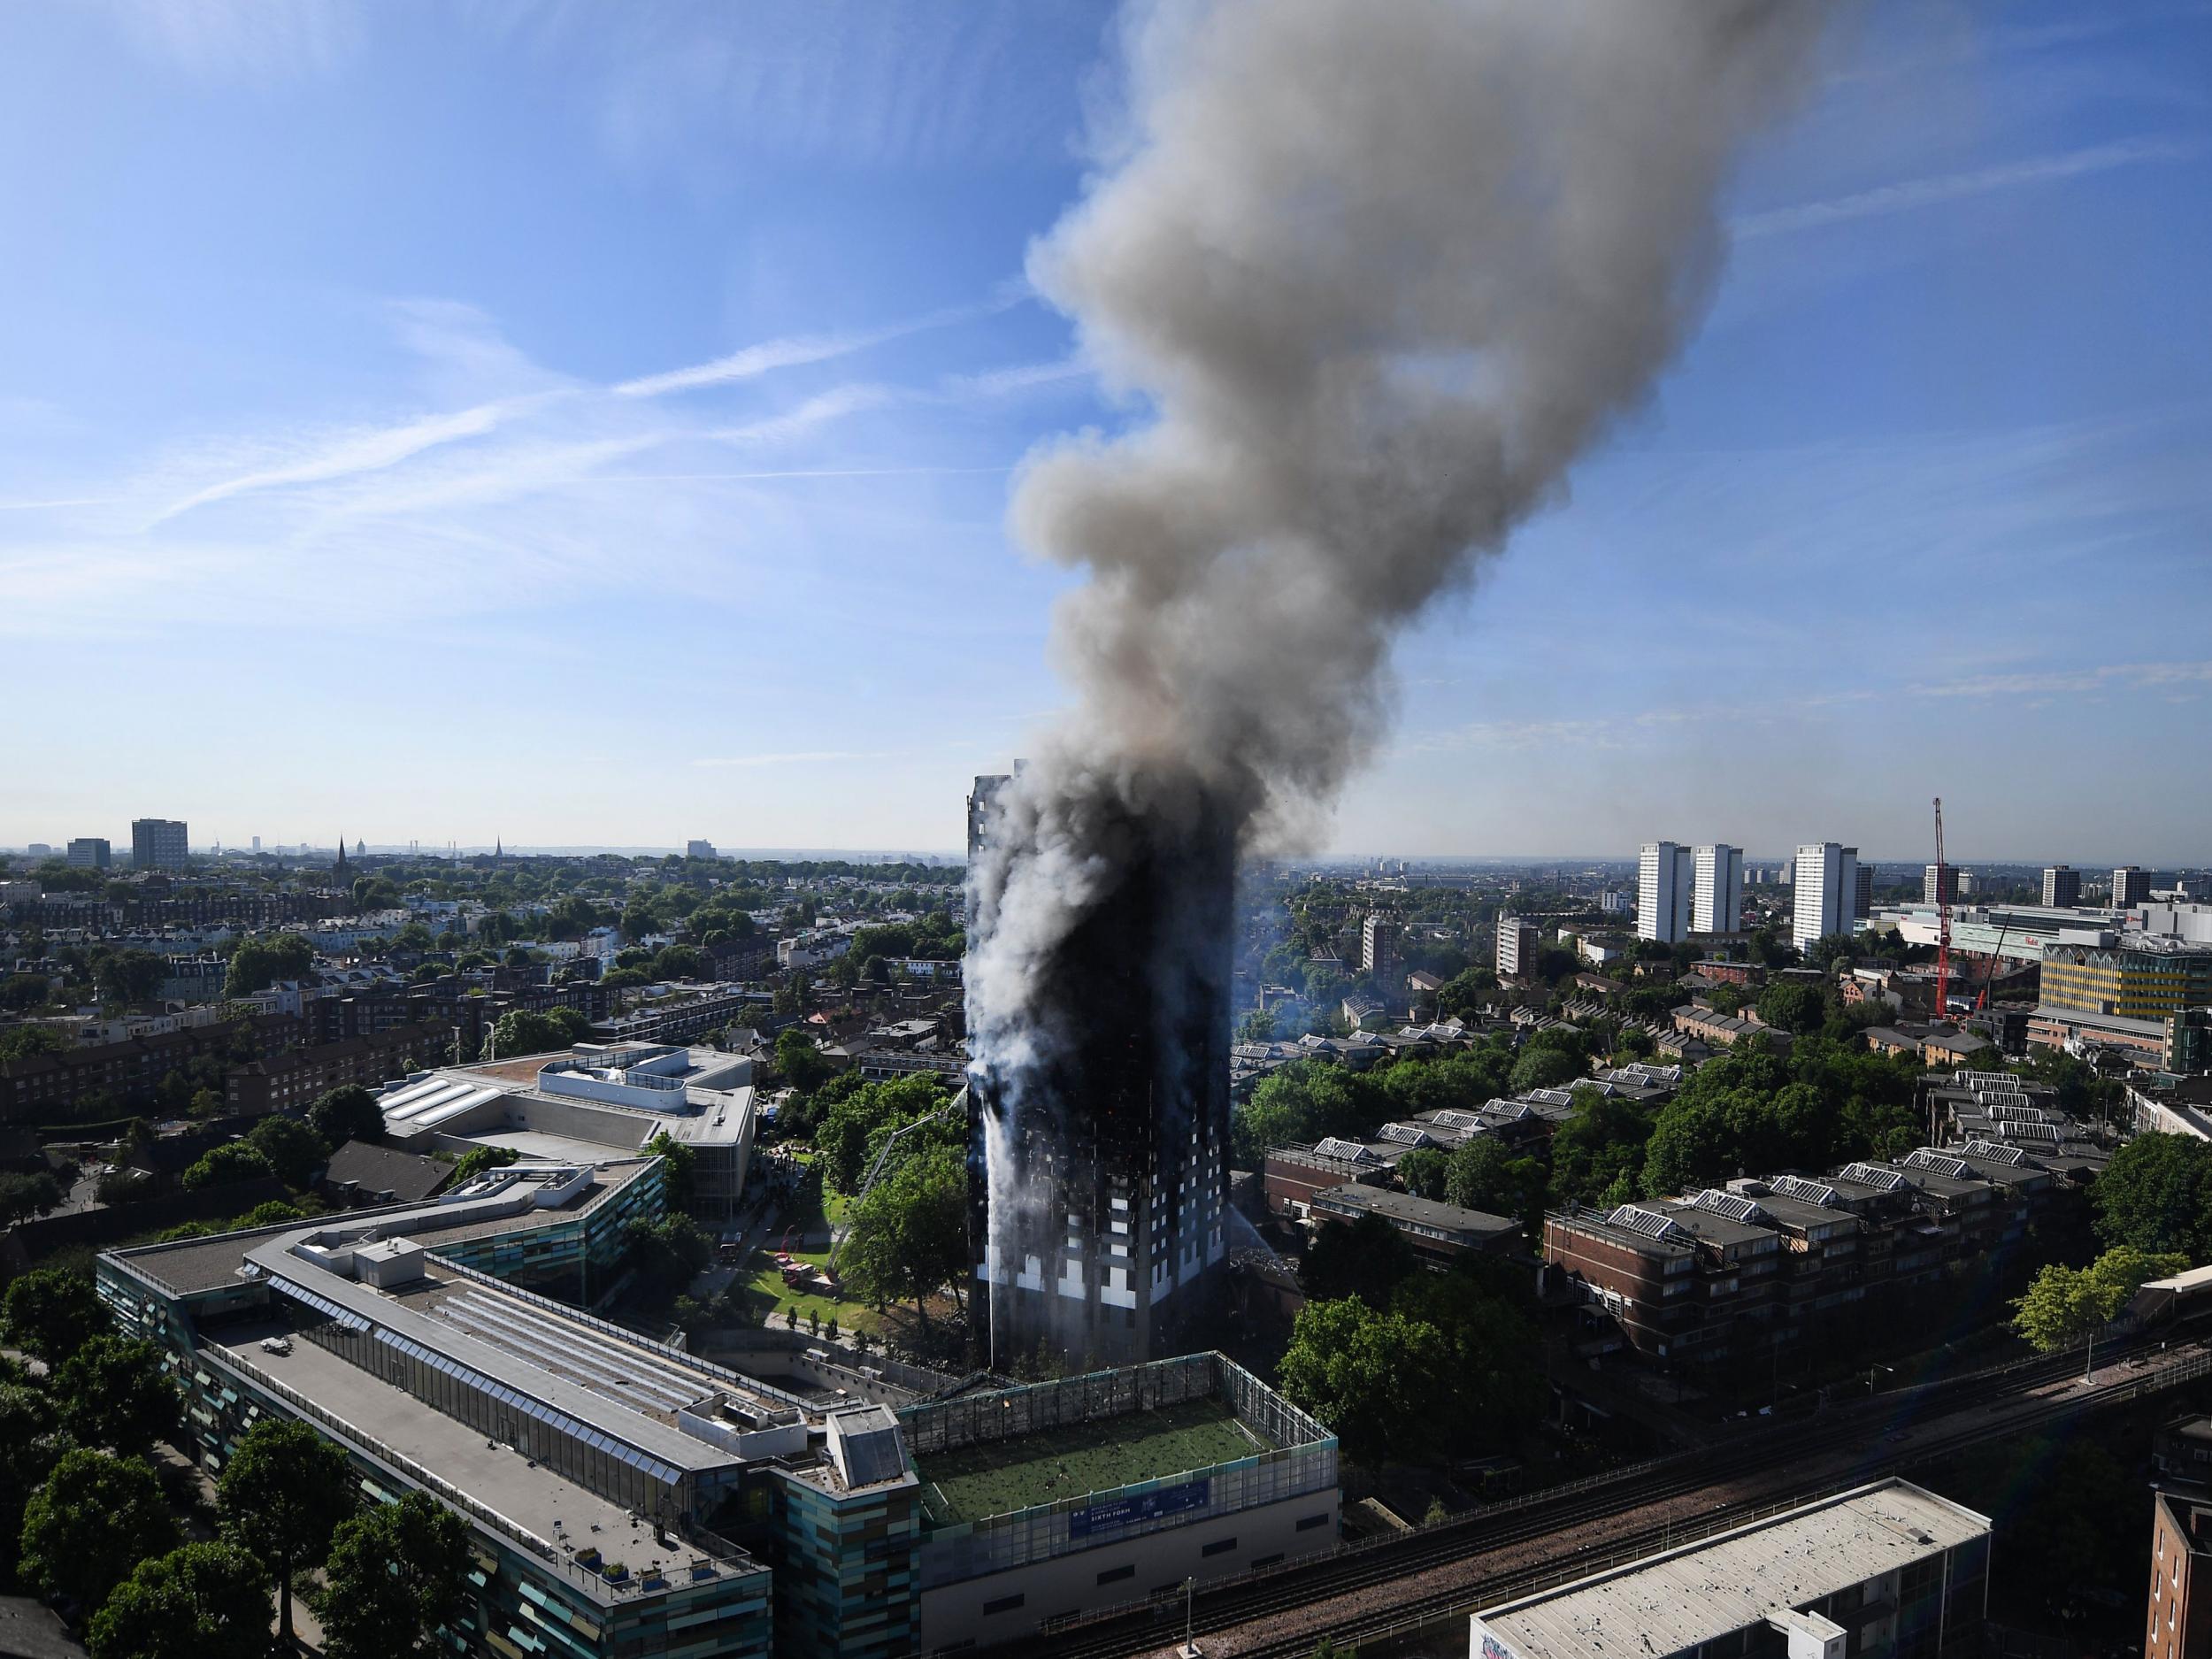 More information about "Τα φθηνά υλικά "έκαψαν" τον Πύργο Γκρένφελ στο Λονδίνο"